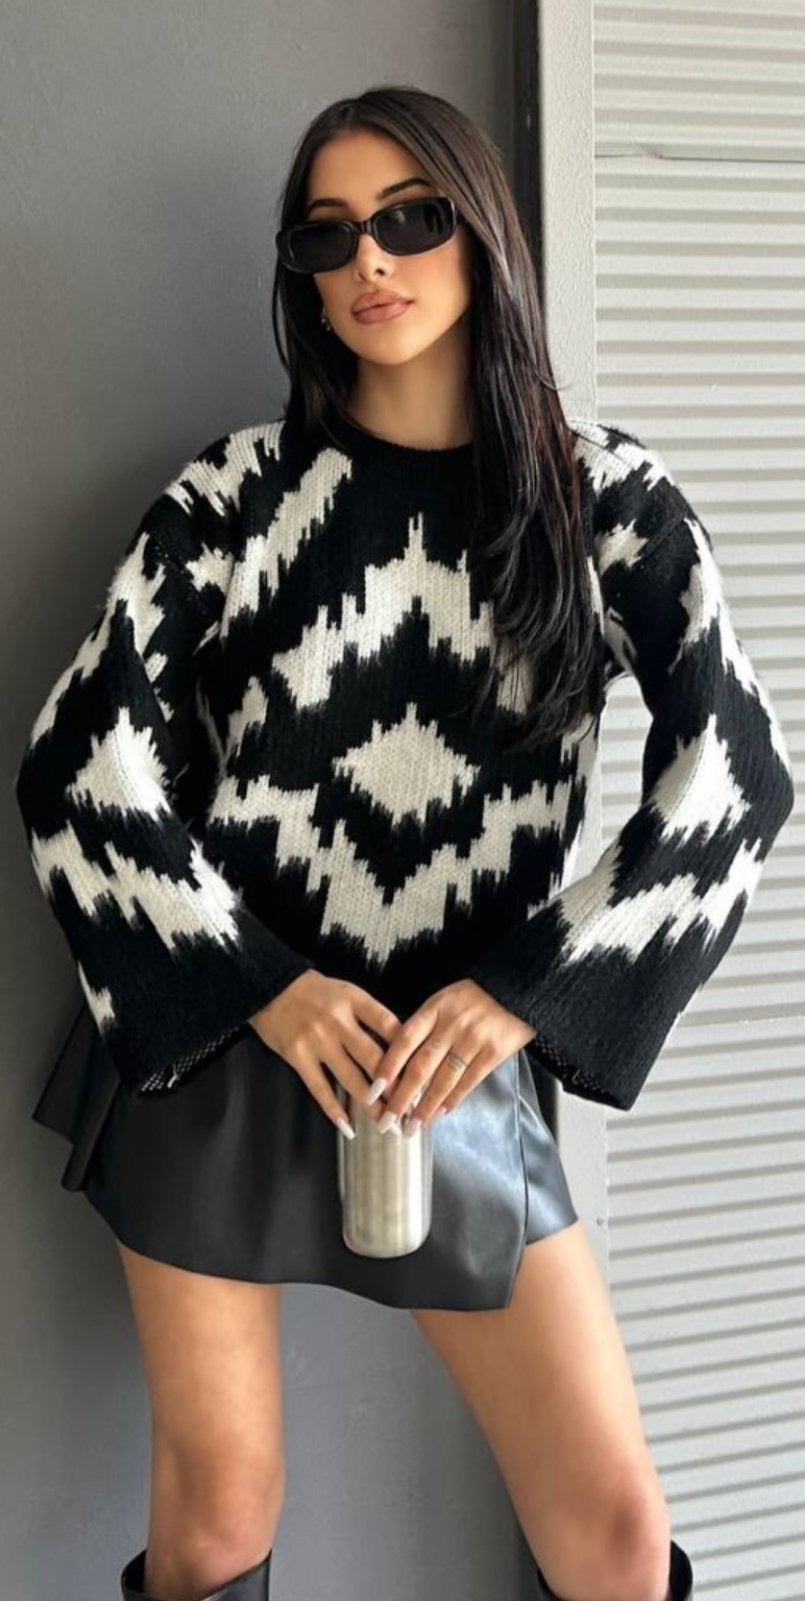 Black&white sweater